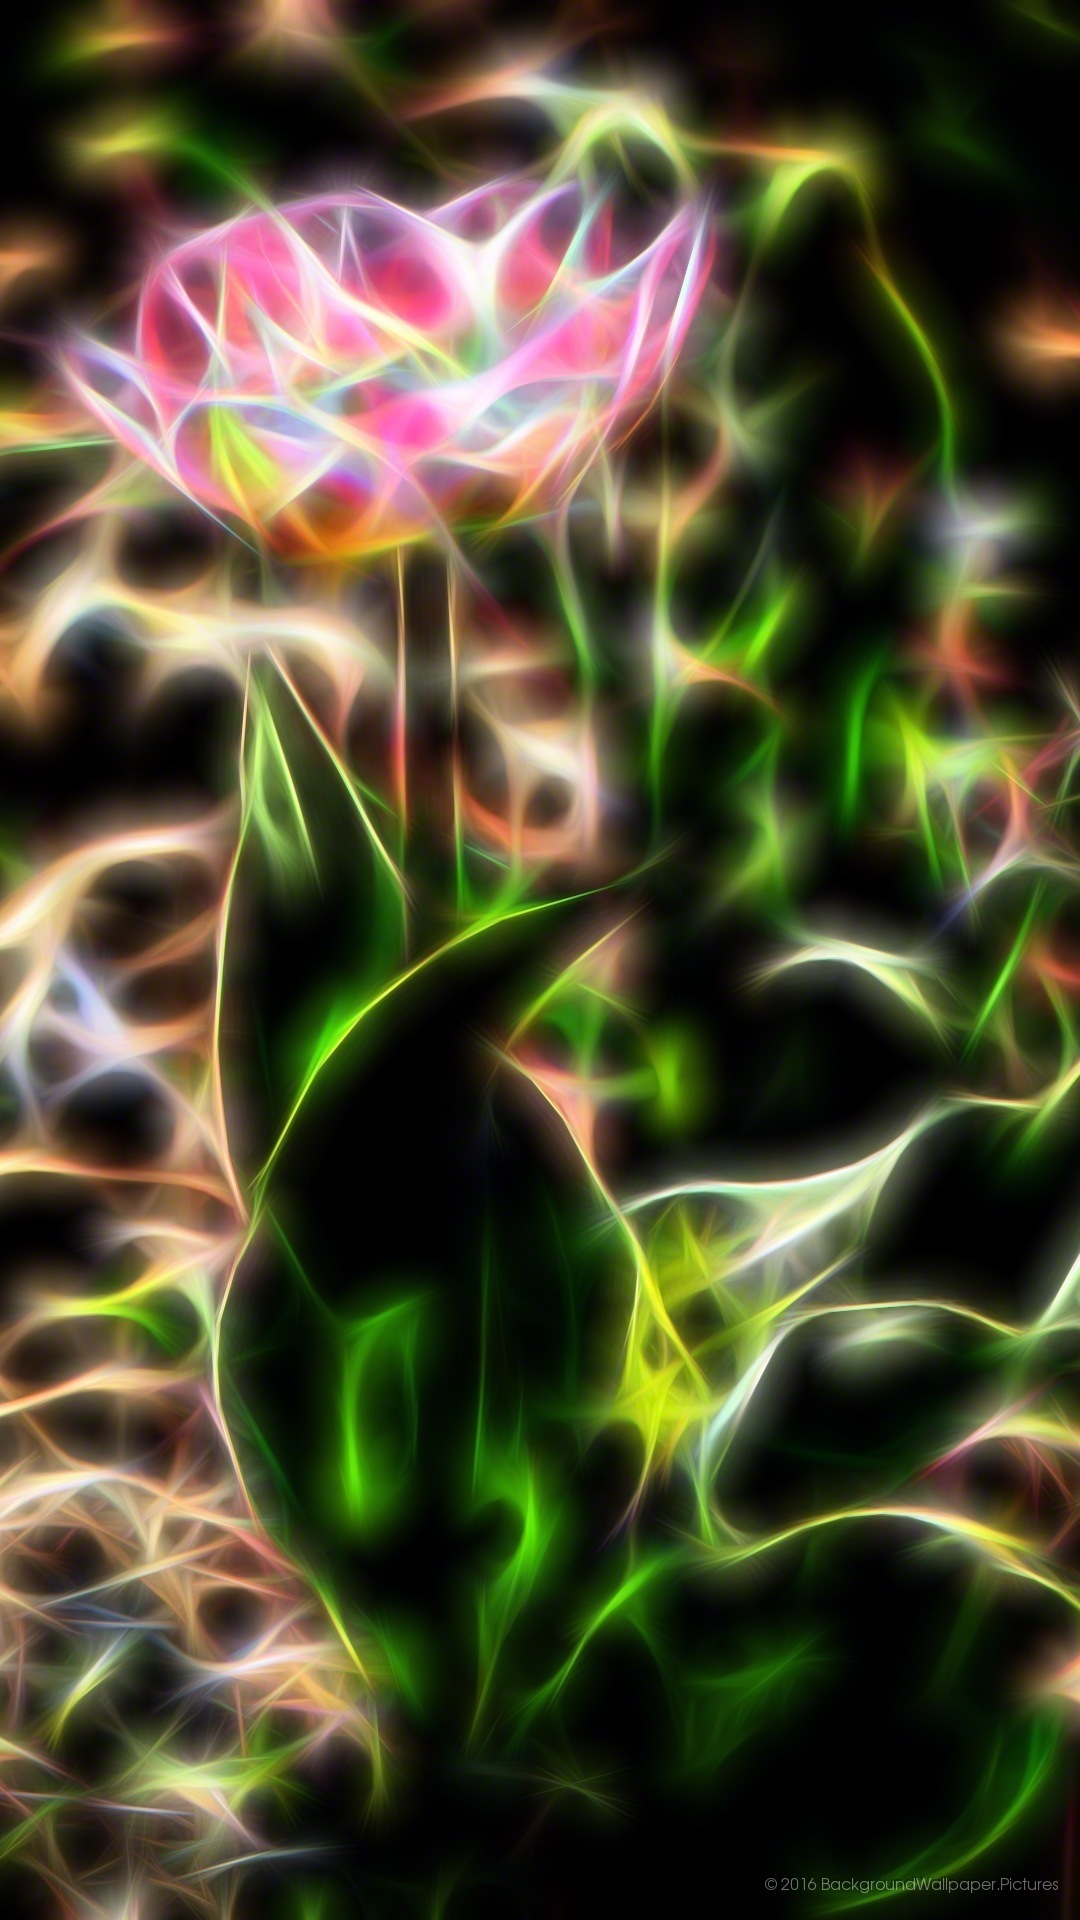 lyf mobile wallpaper hd,green,fractal art,purple,leaf,plant